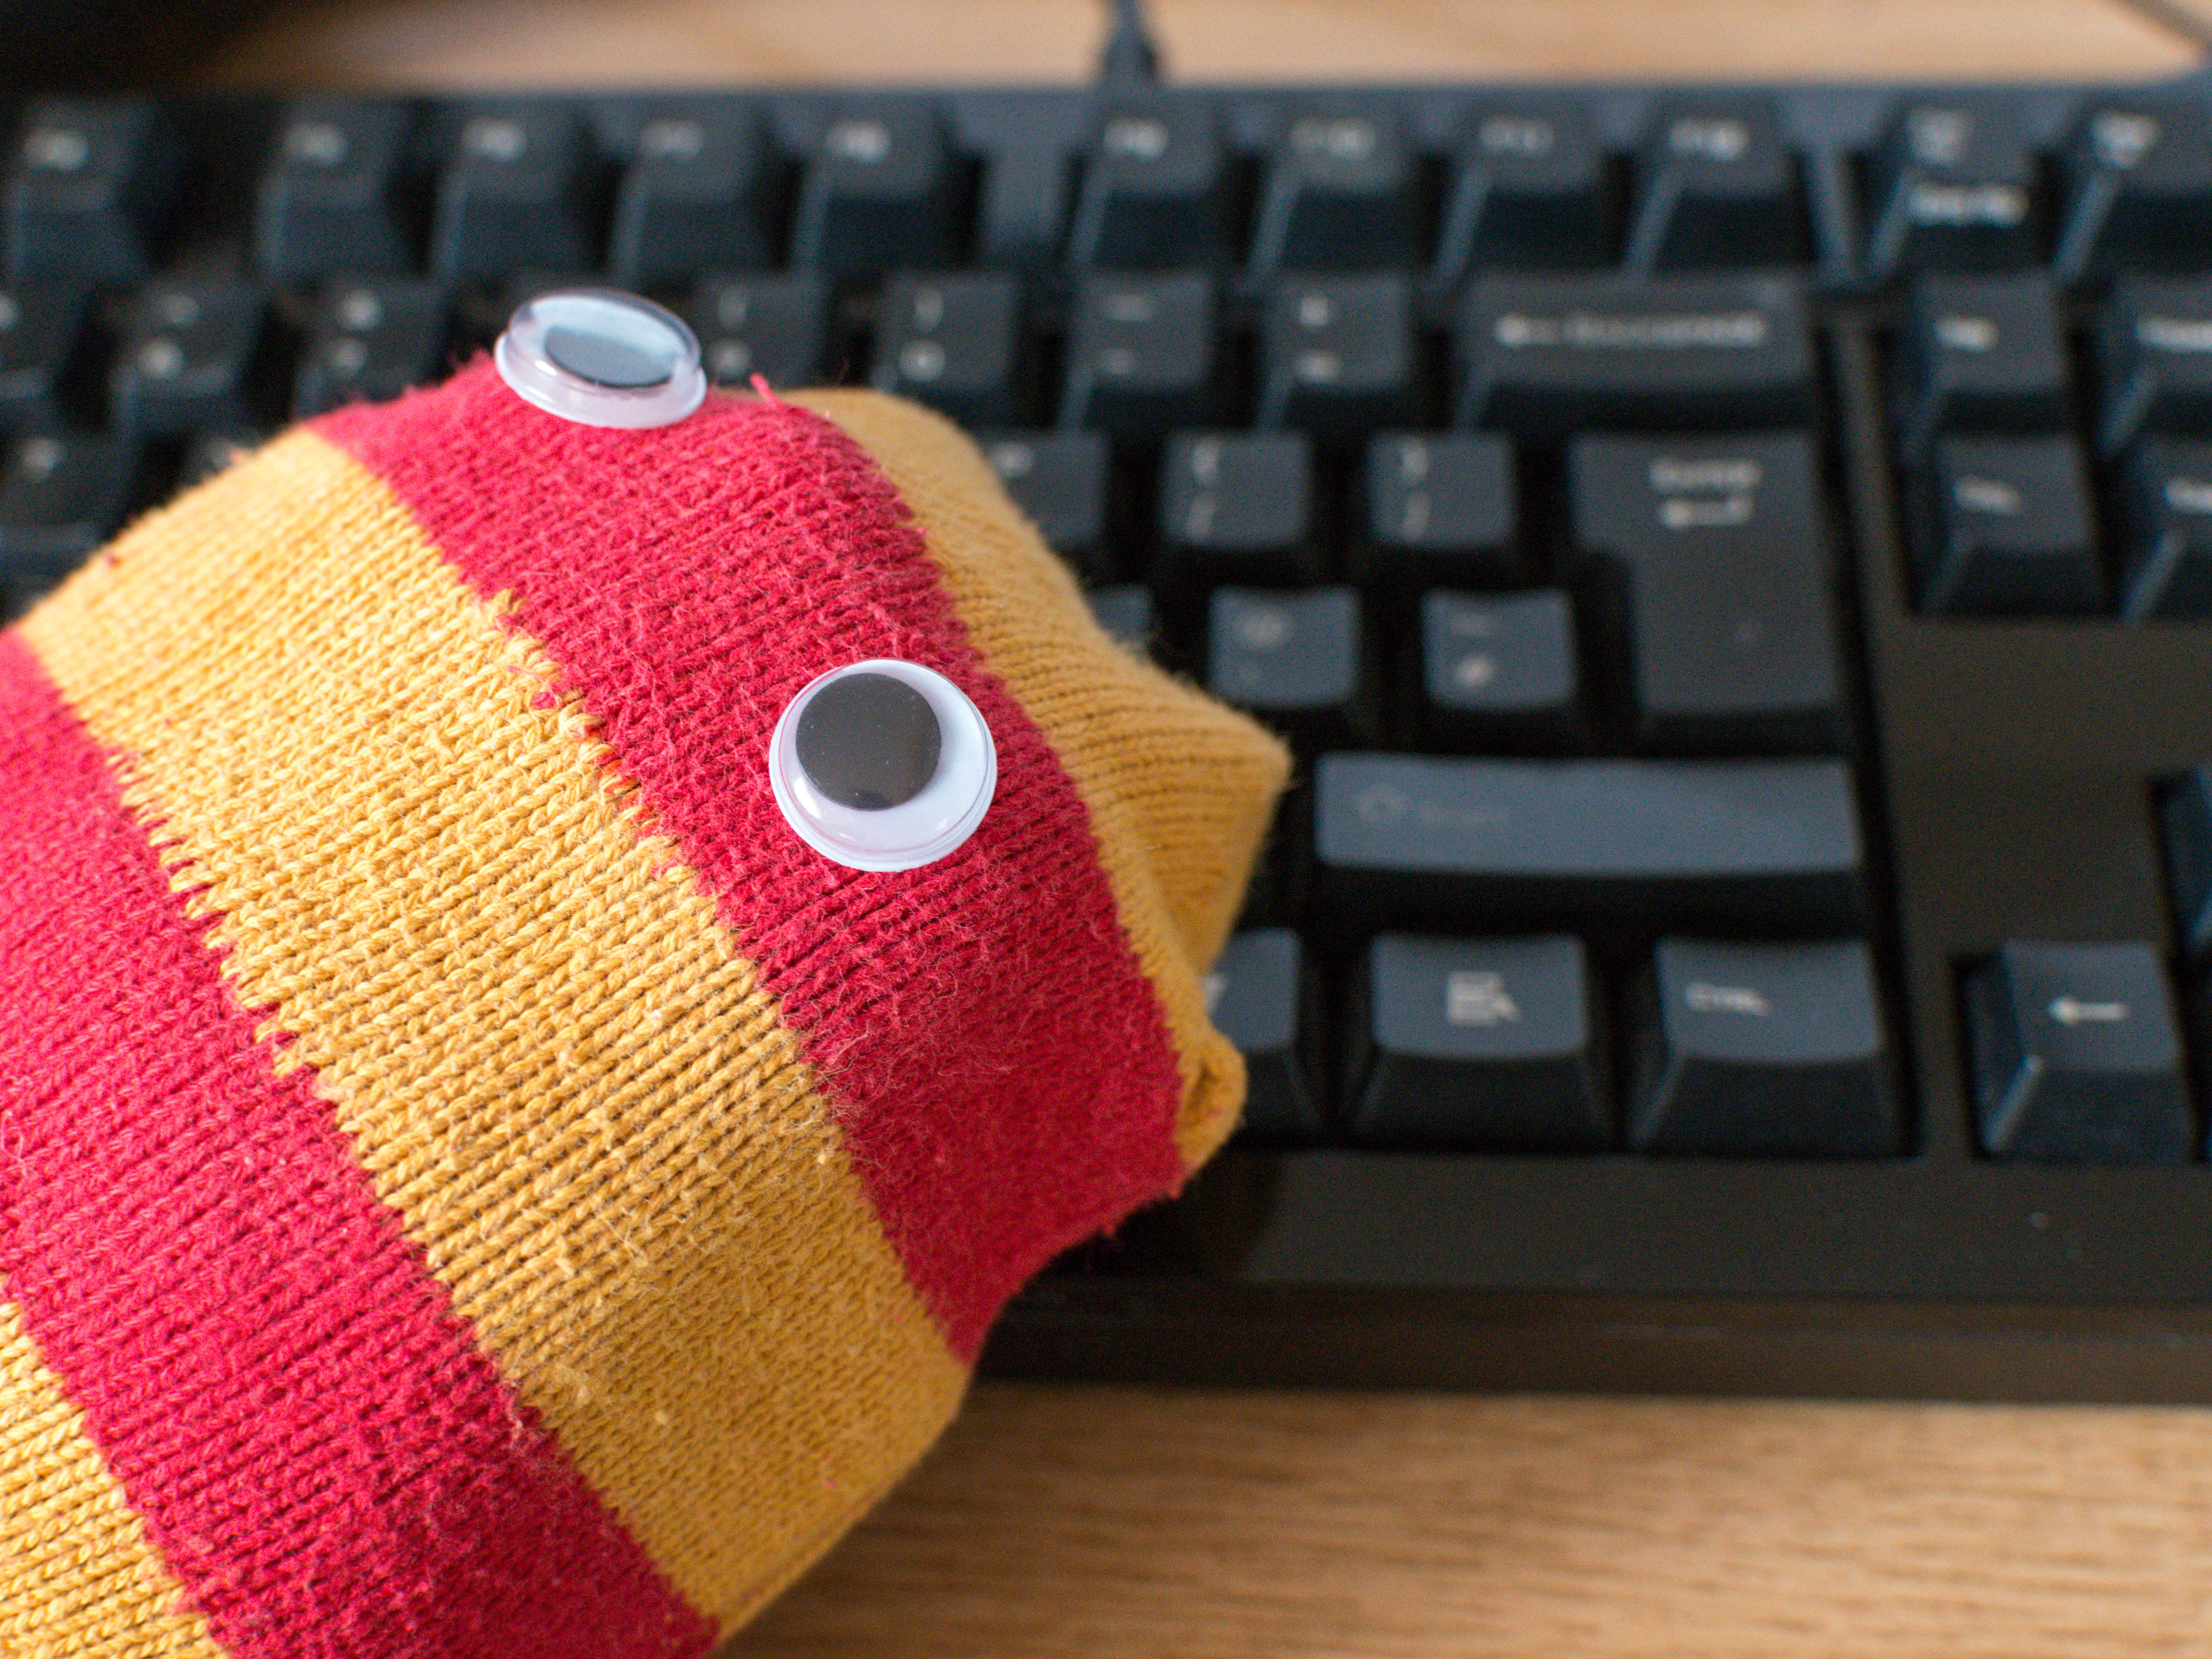 Sock_puppet_and_keyboard.jpg